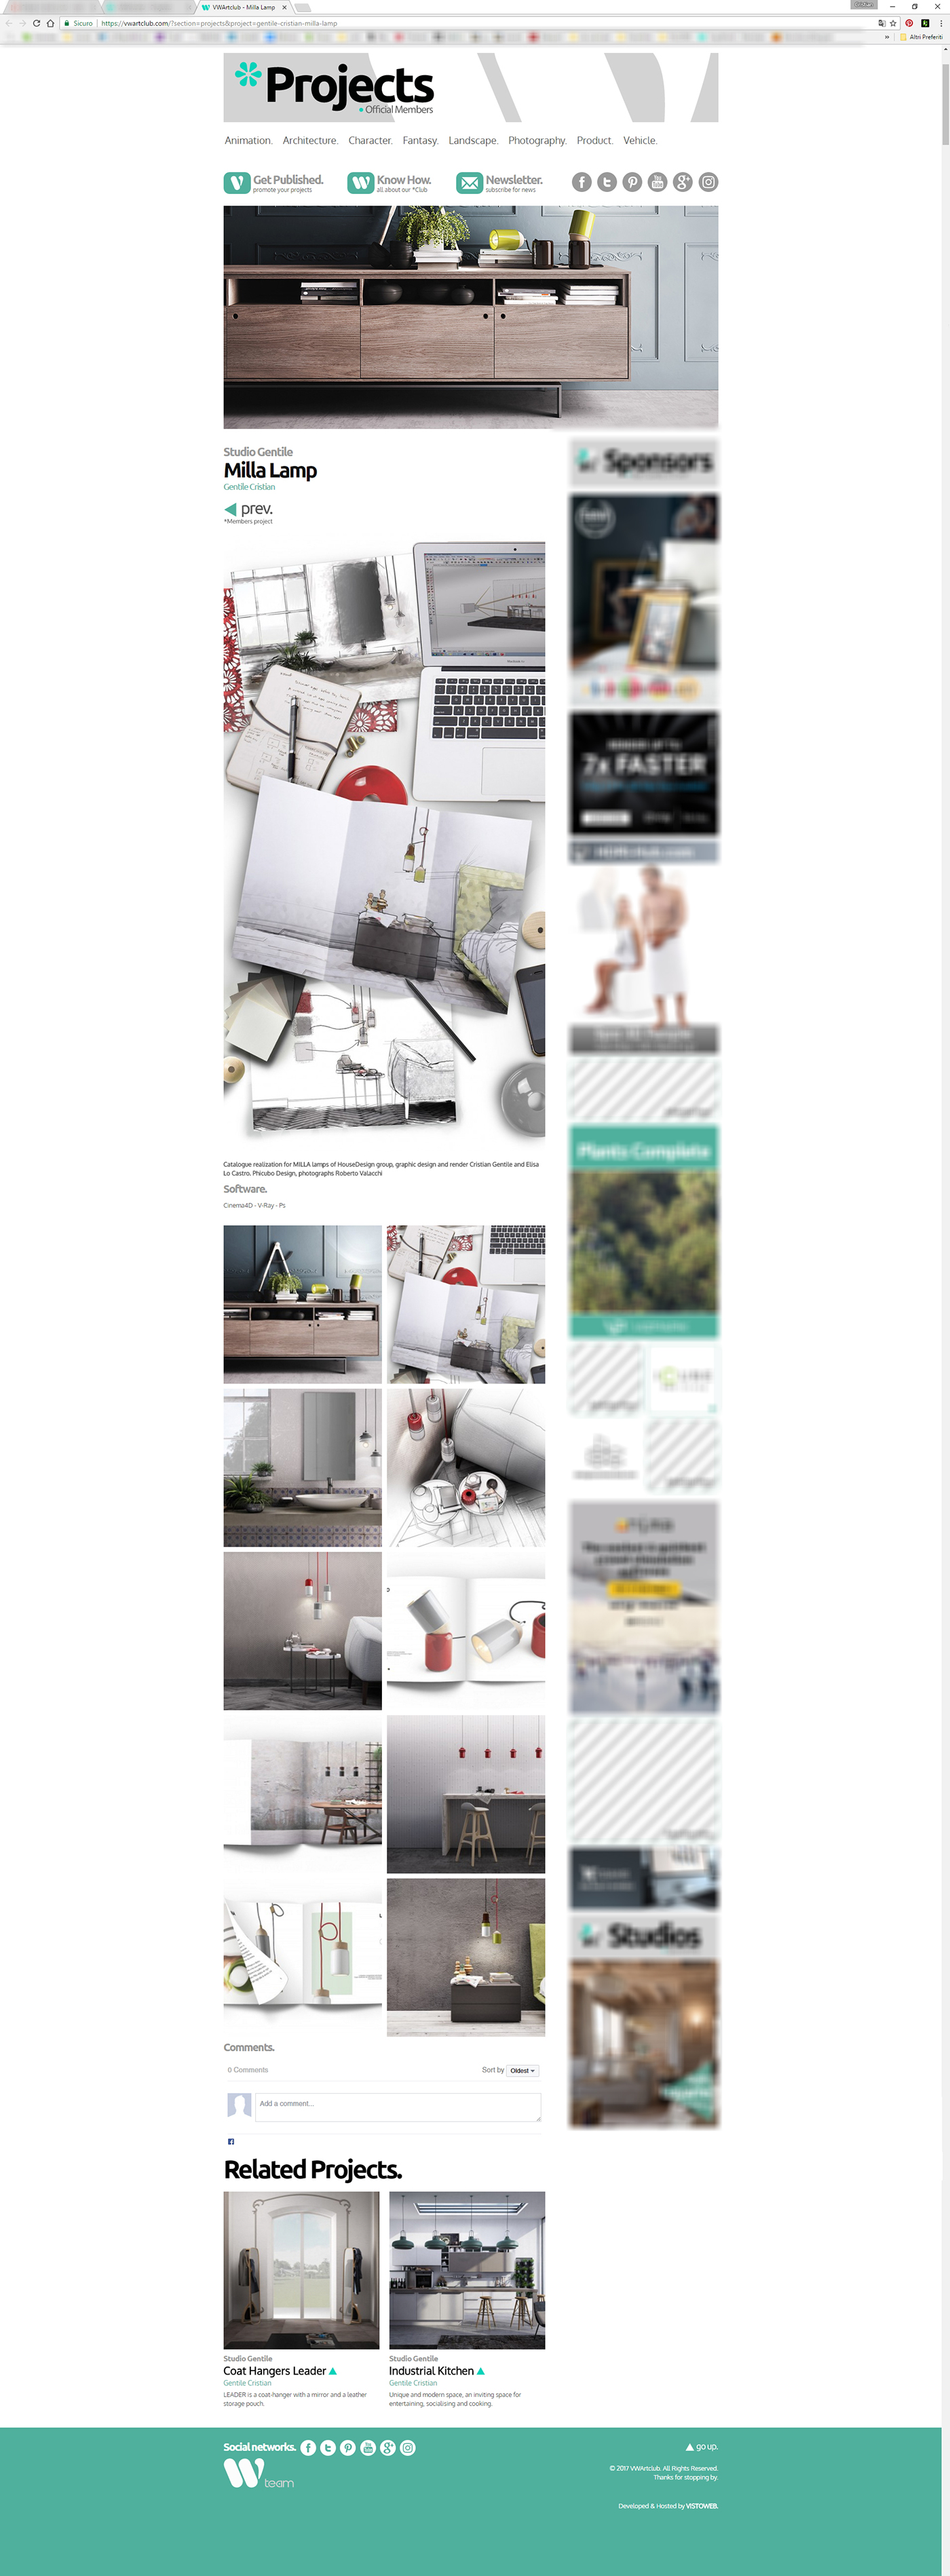 +architecture+ design industrial digital Render cinema 4d vray photoshop Illustrator Interior living Lamp furniture bathroom kitchen